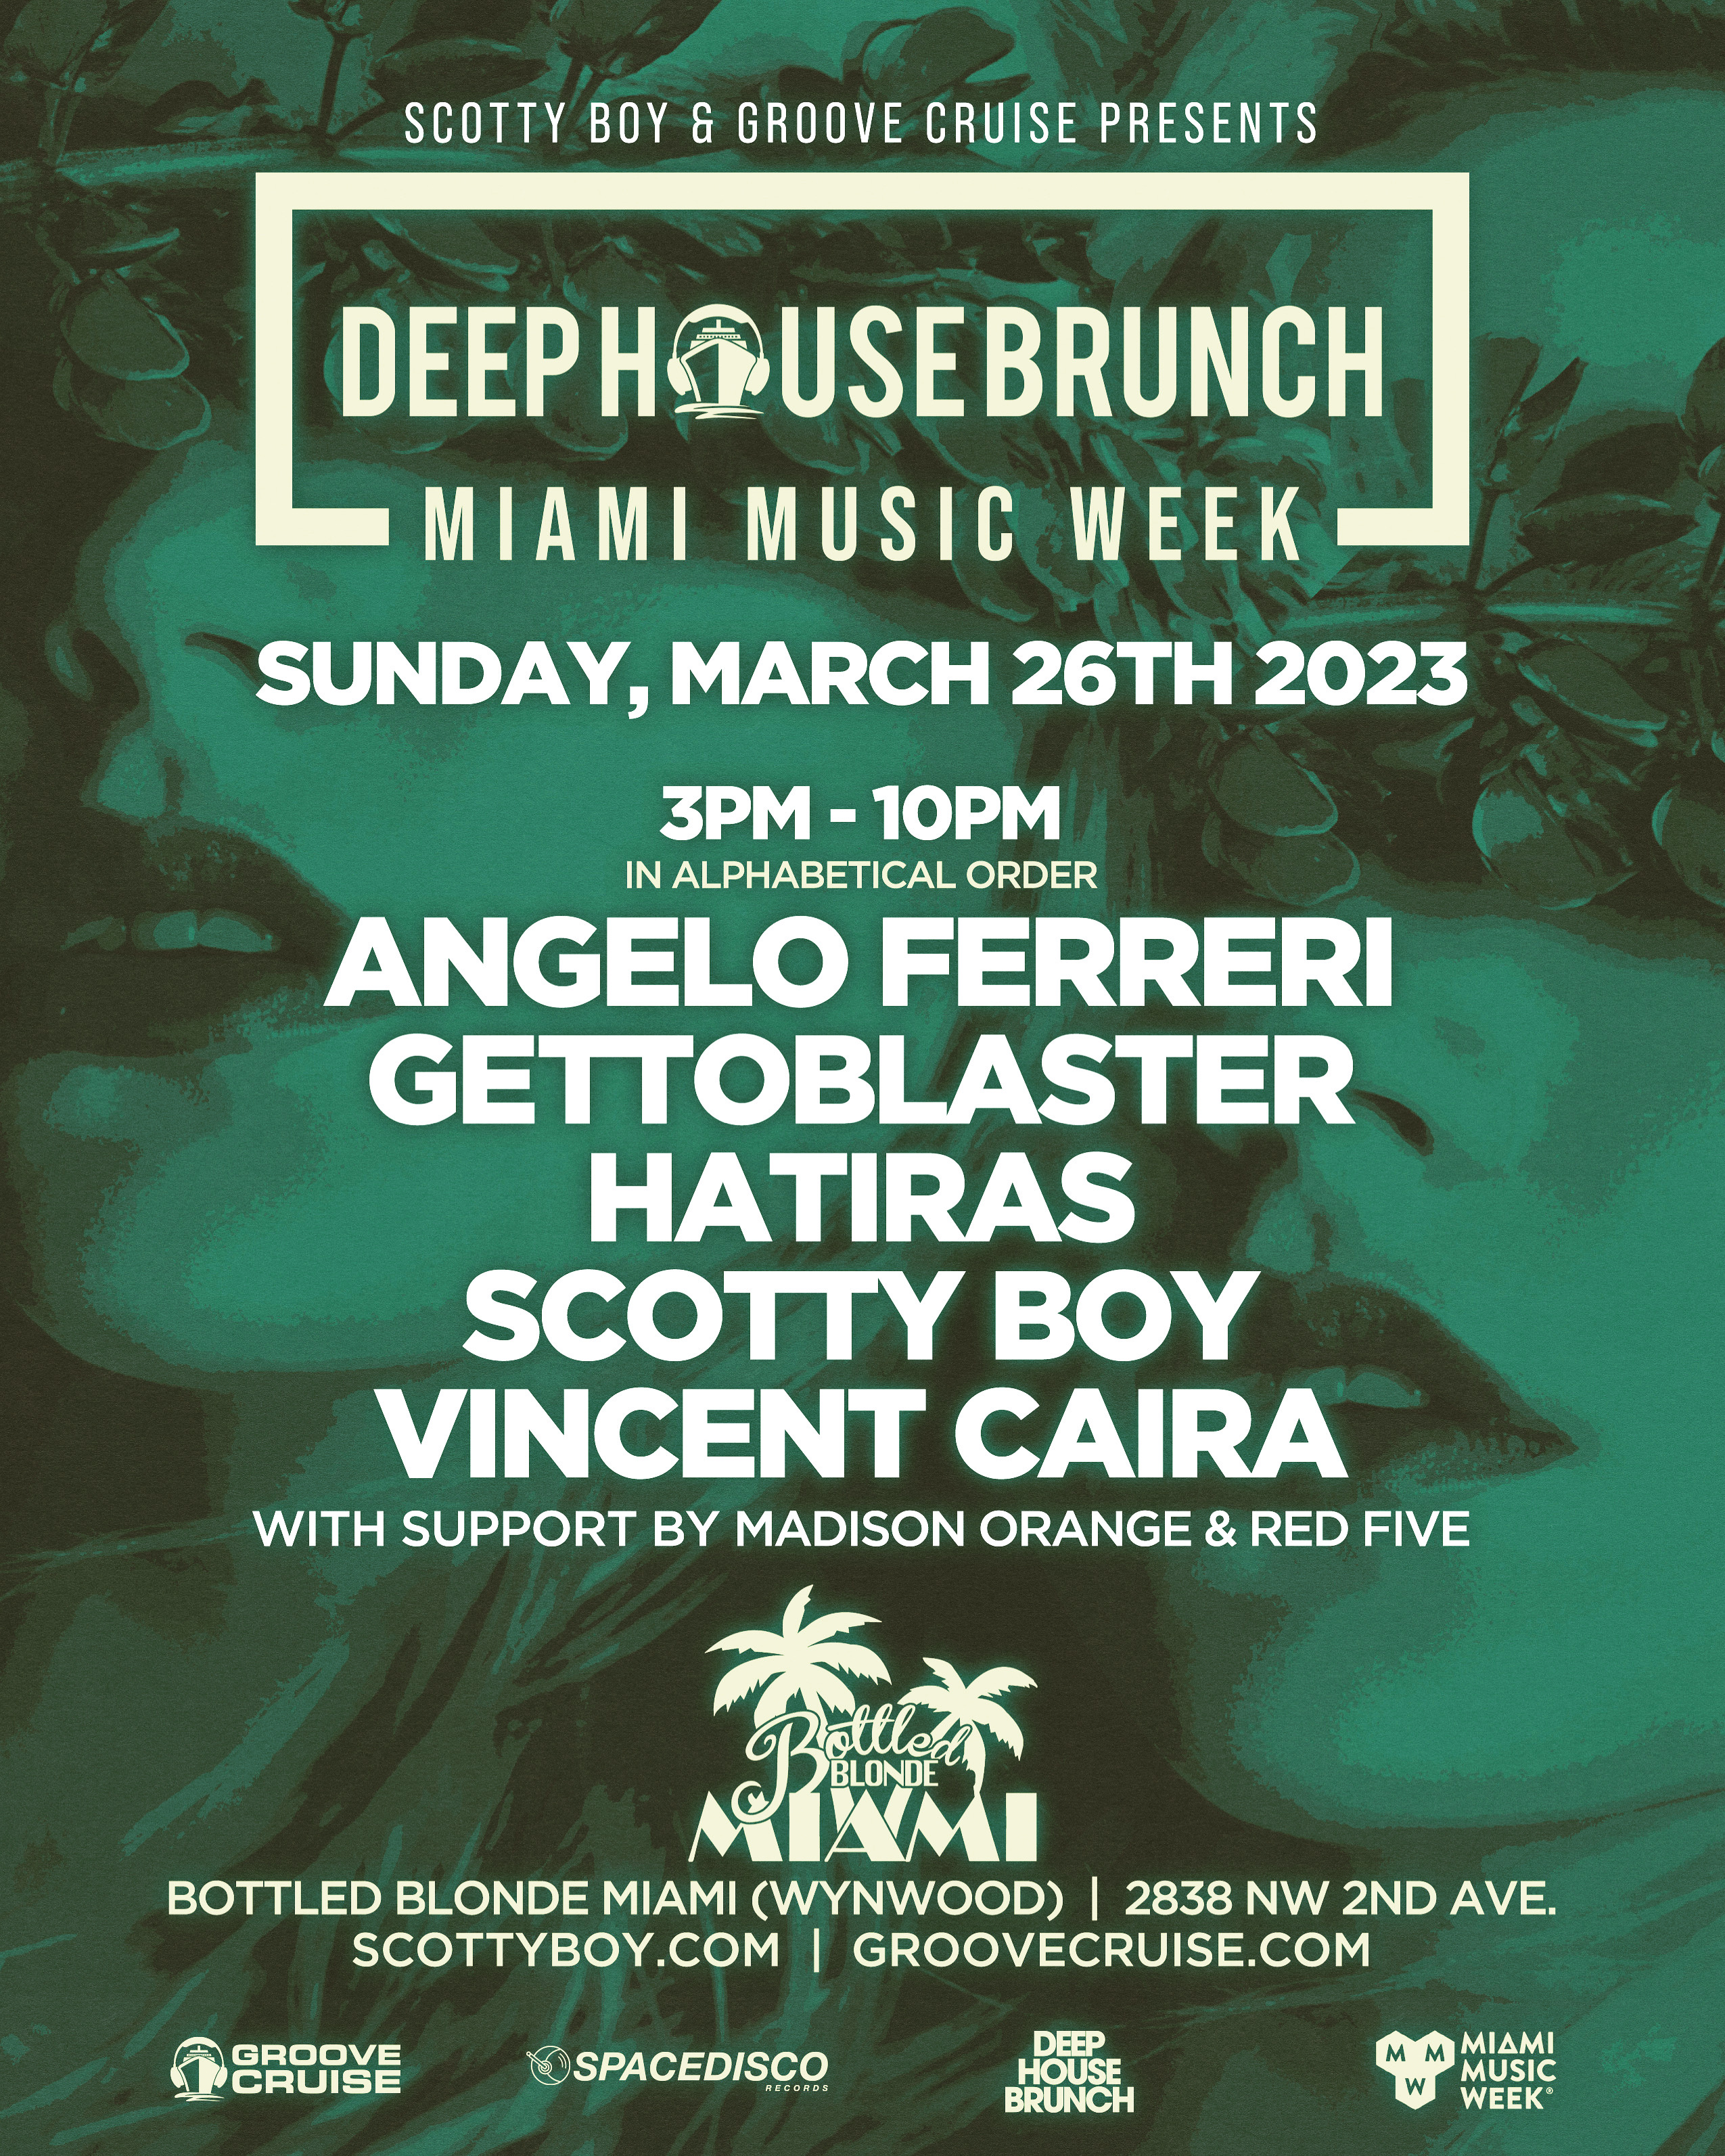 Deep House Brunch: Miami Music Week Image